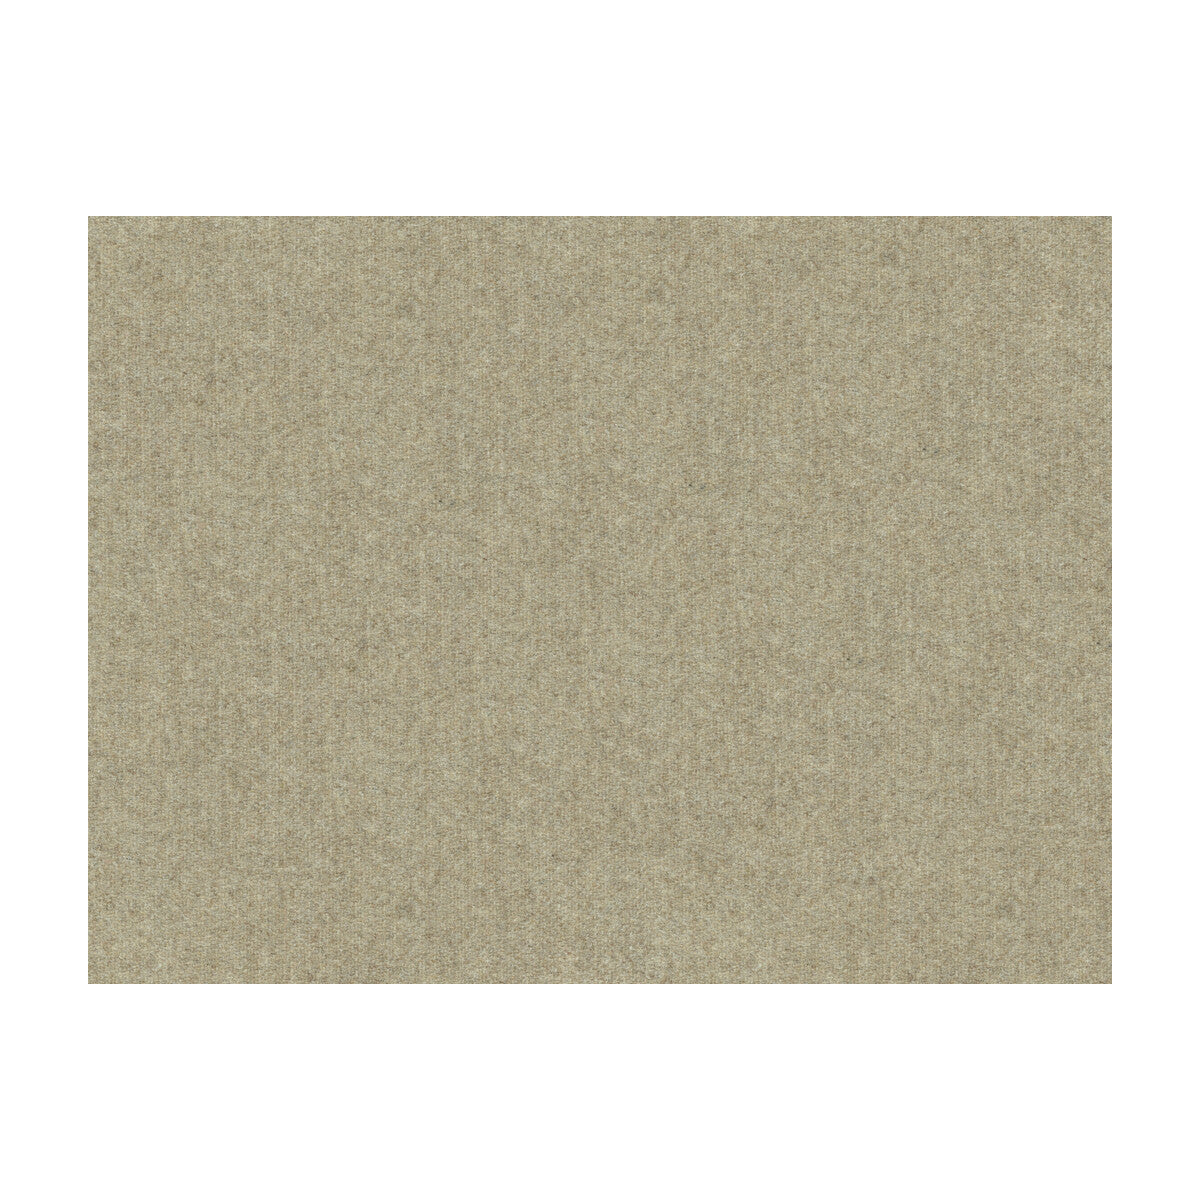 Chevalier Wool fabric in hemp color - pattern 8013149.6116.0 - by Brunschwig &amp; Fils